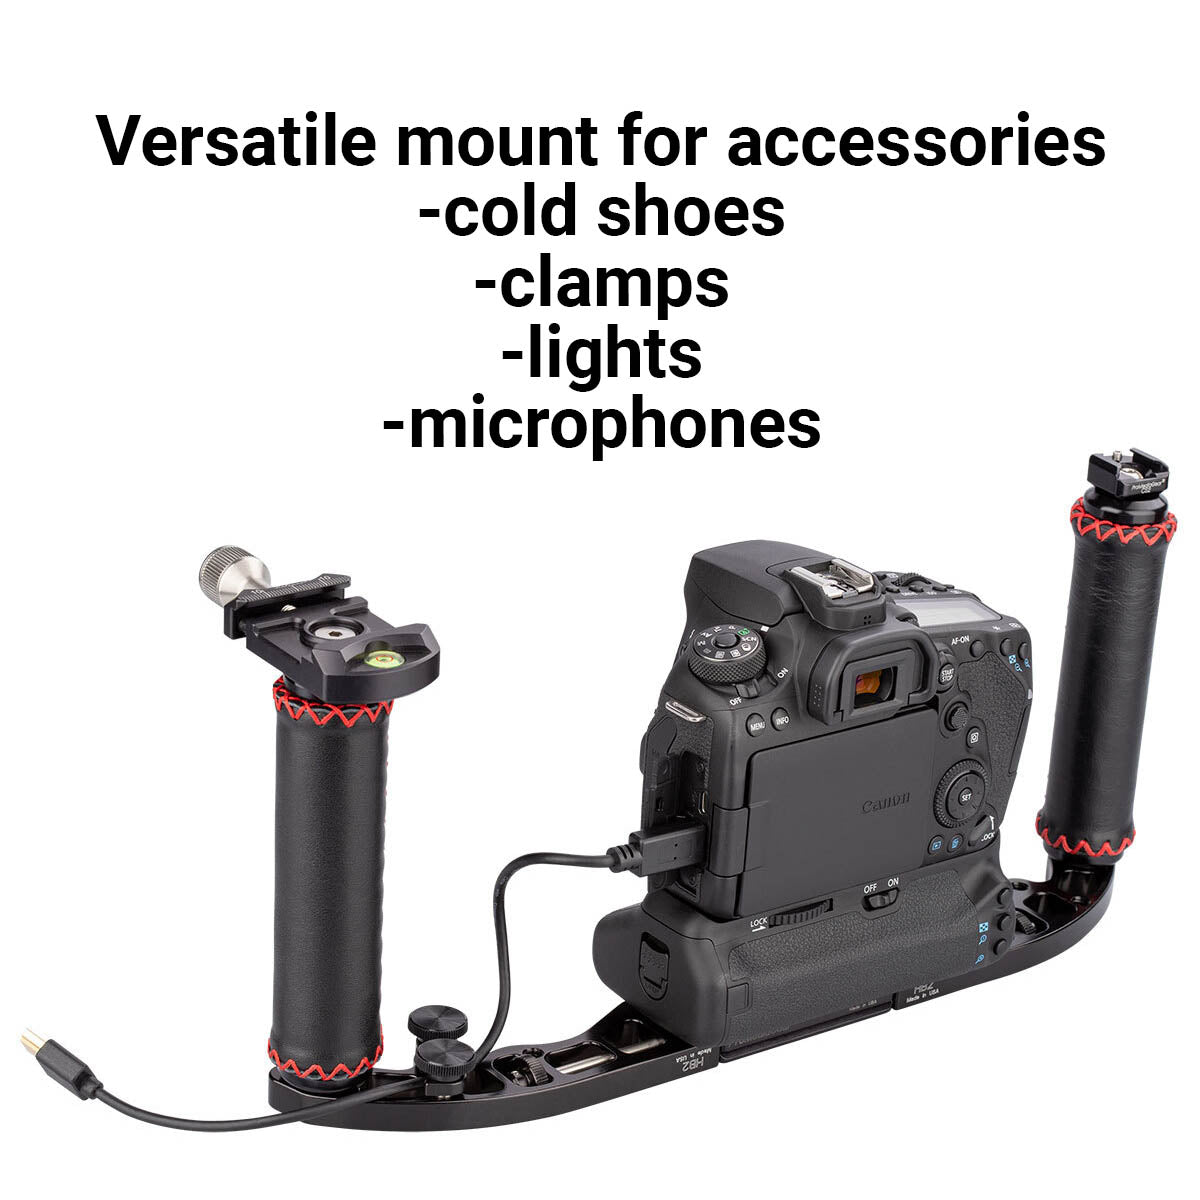 Versatile mount